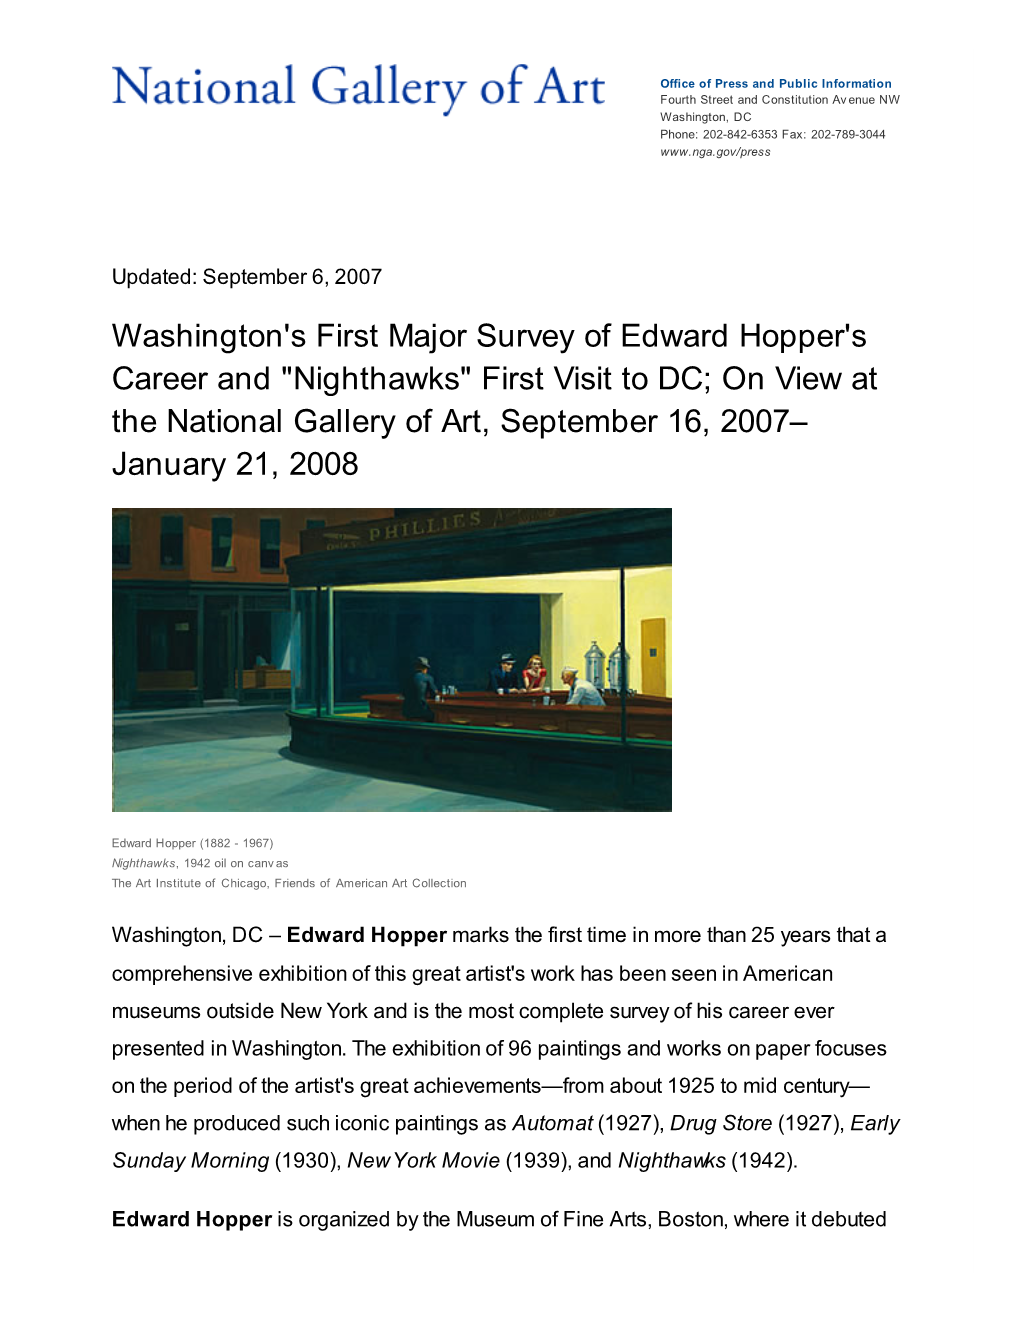 Washington's First Major Survey of Edward